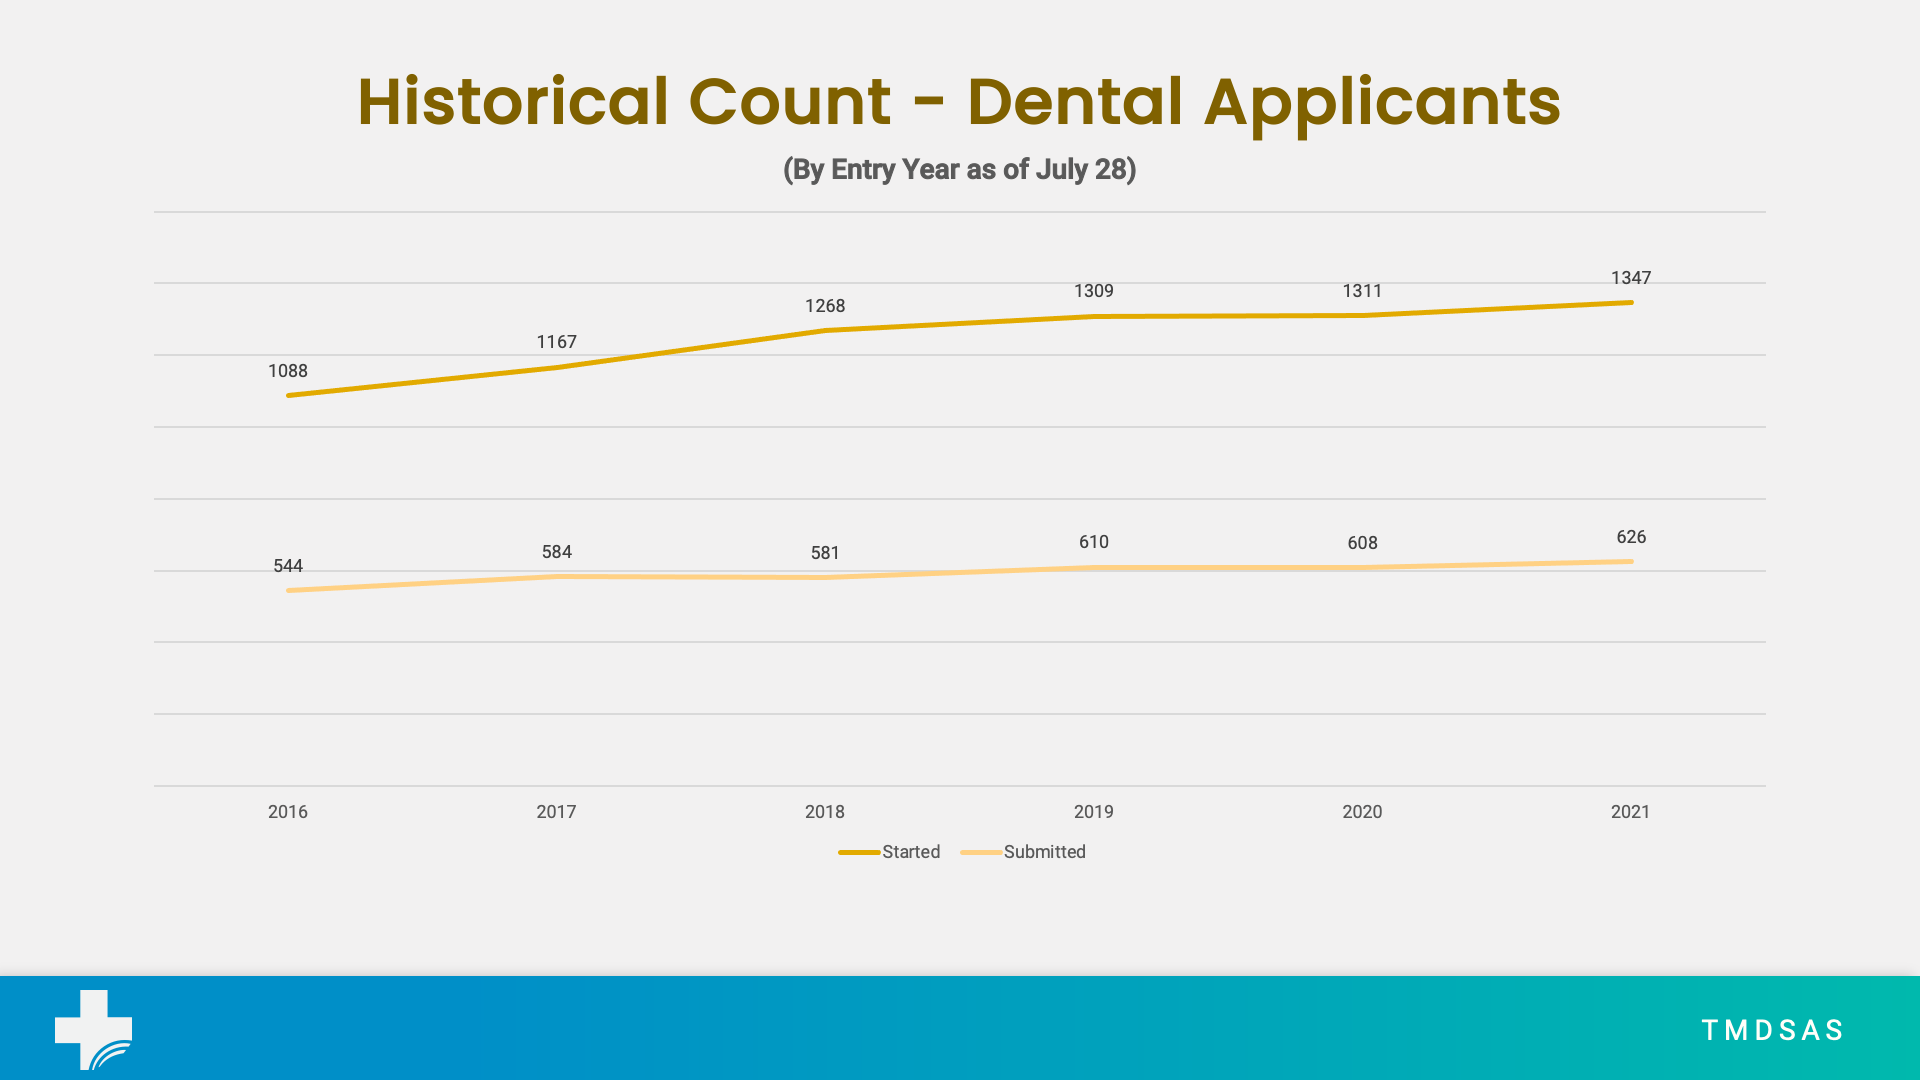 EY21 Dental Applications as of June 15, 2020